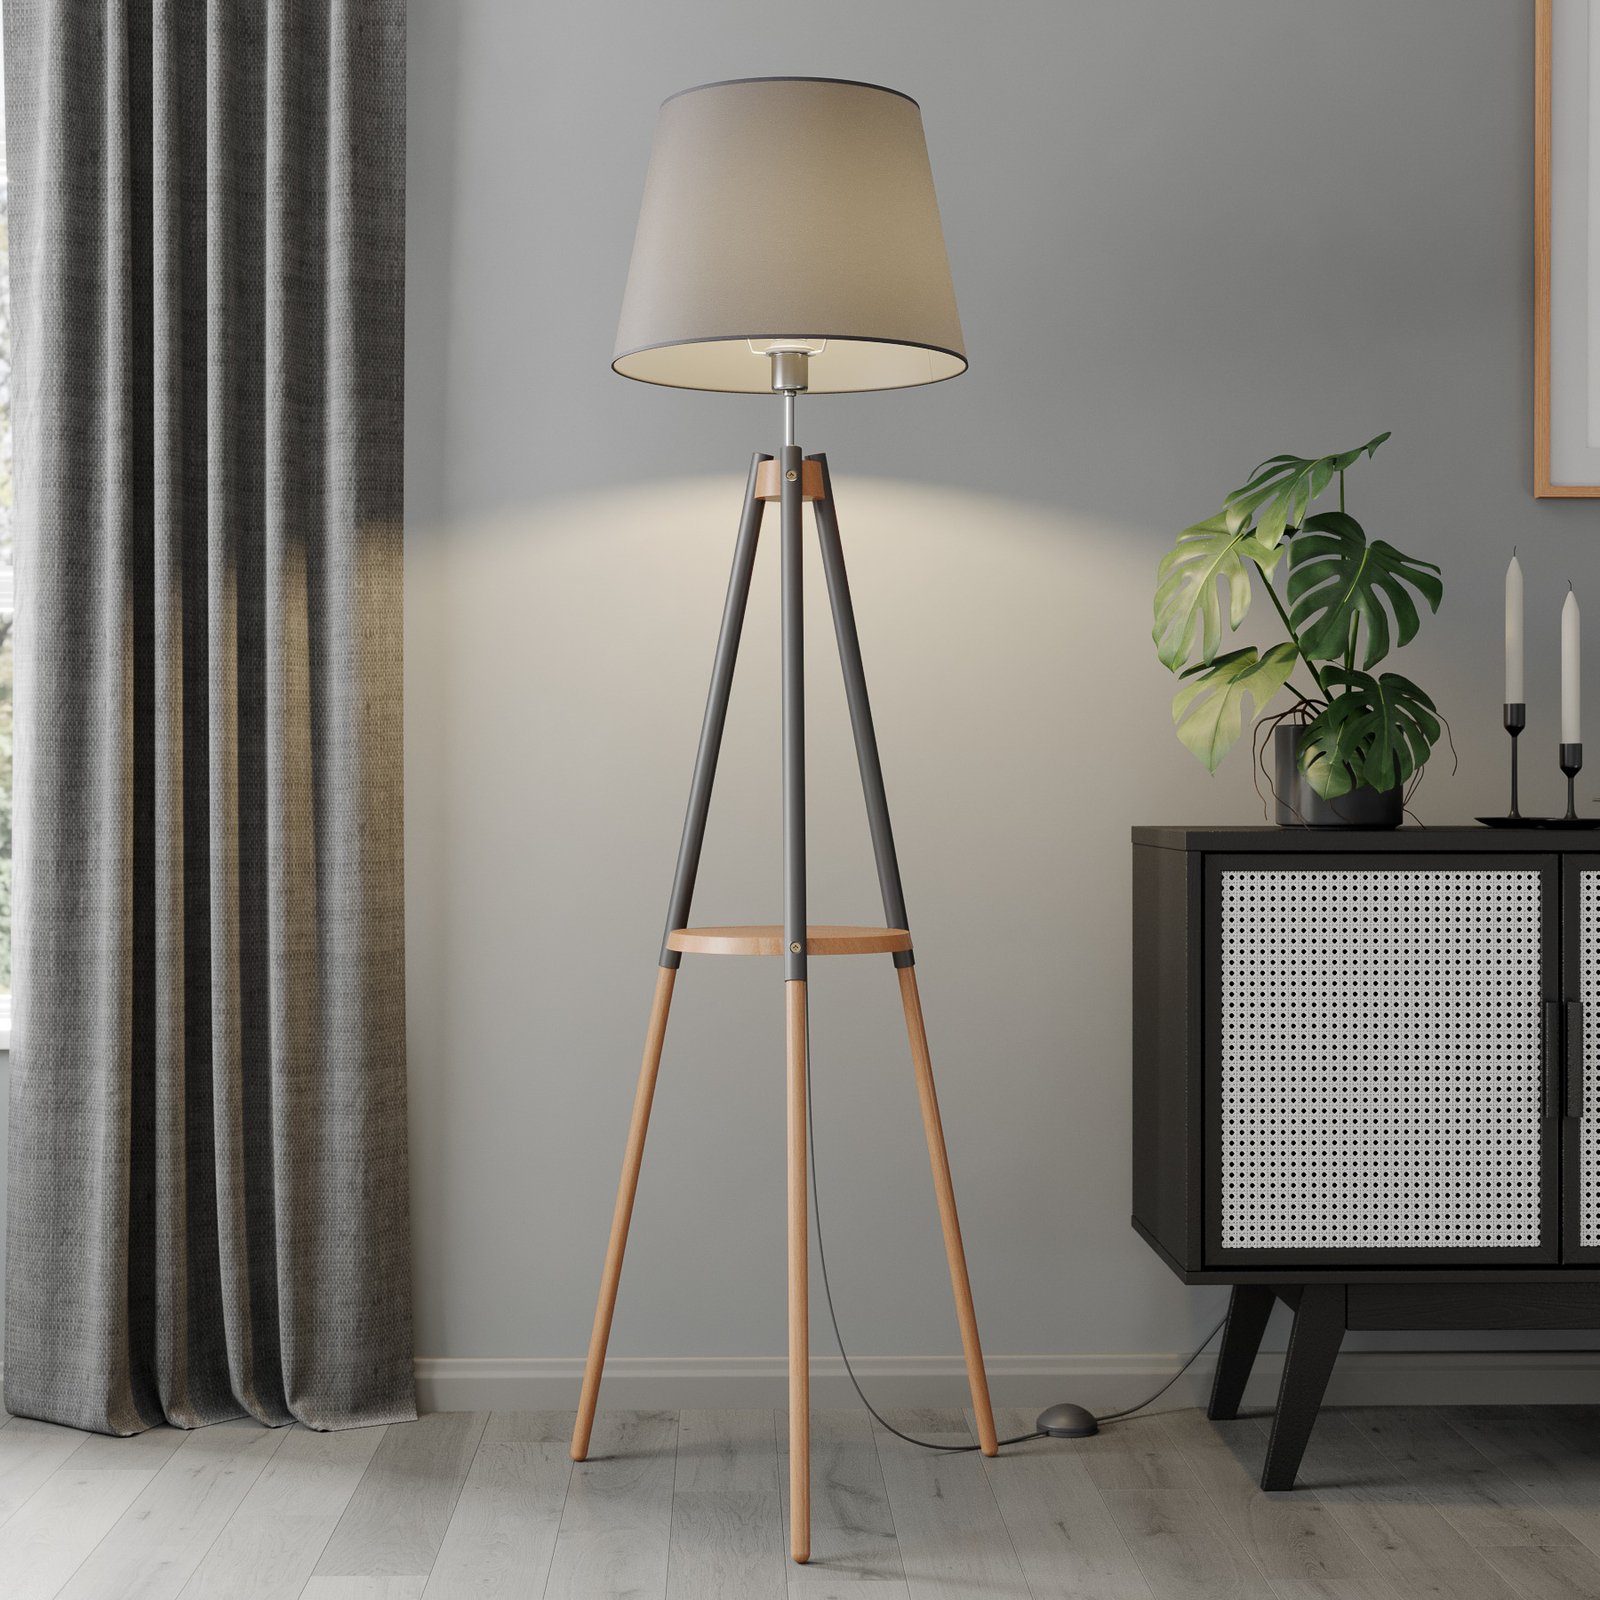 Vaio wooden tripod floor lamp, grey lampshade